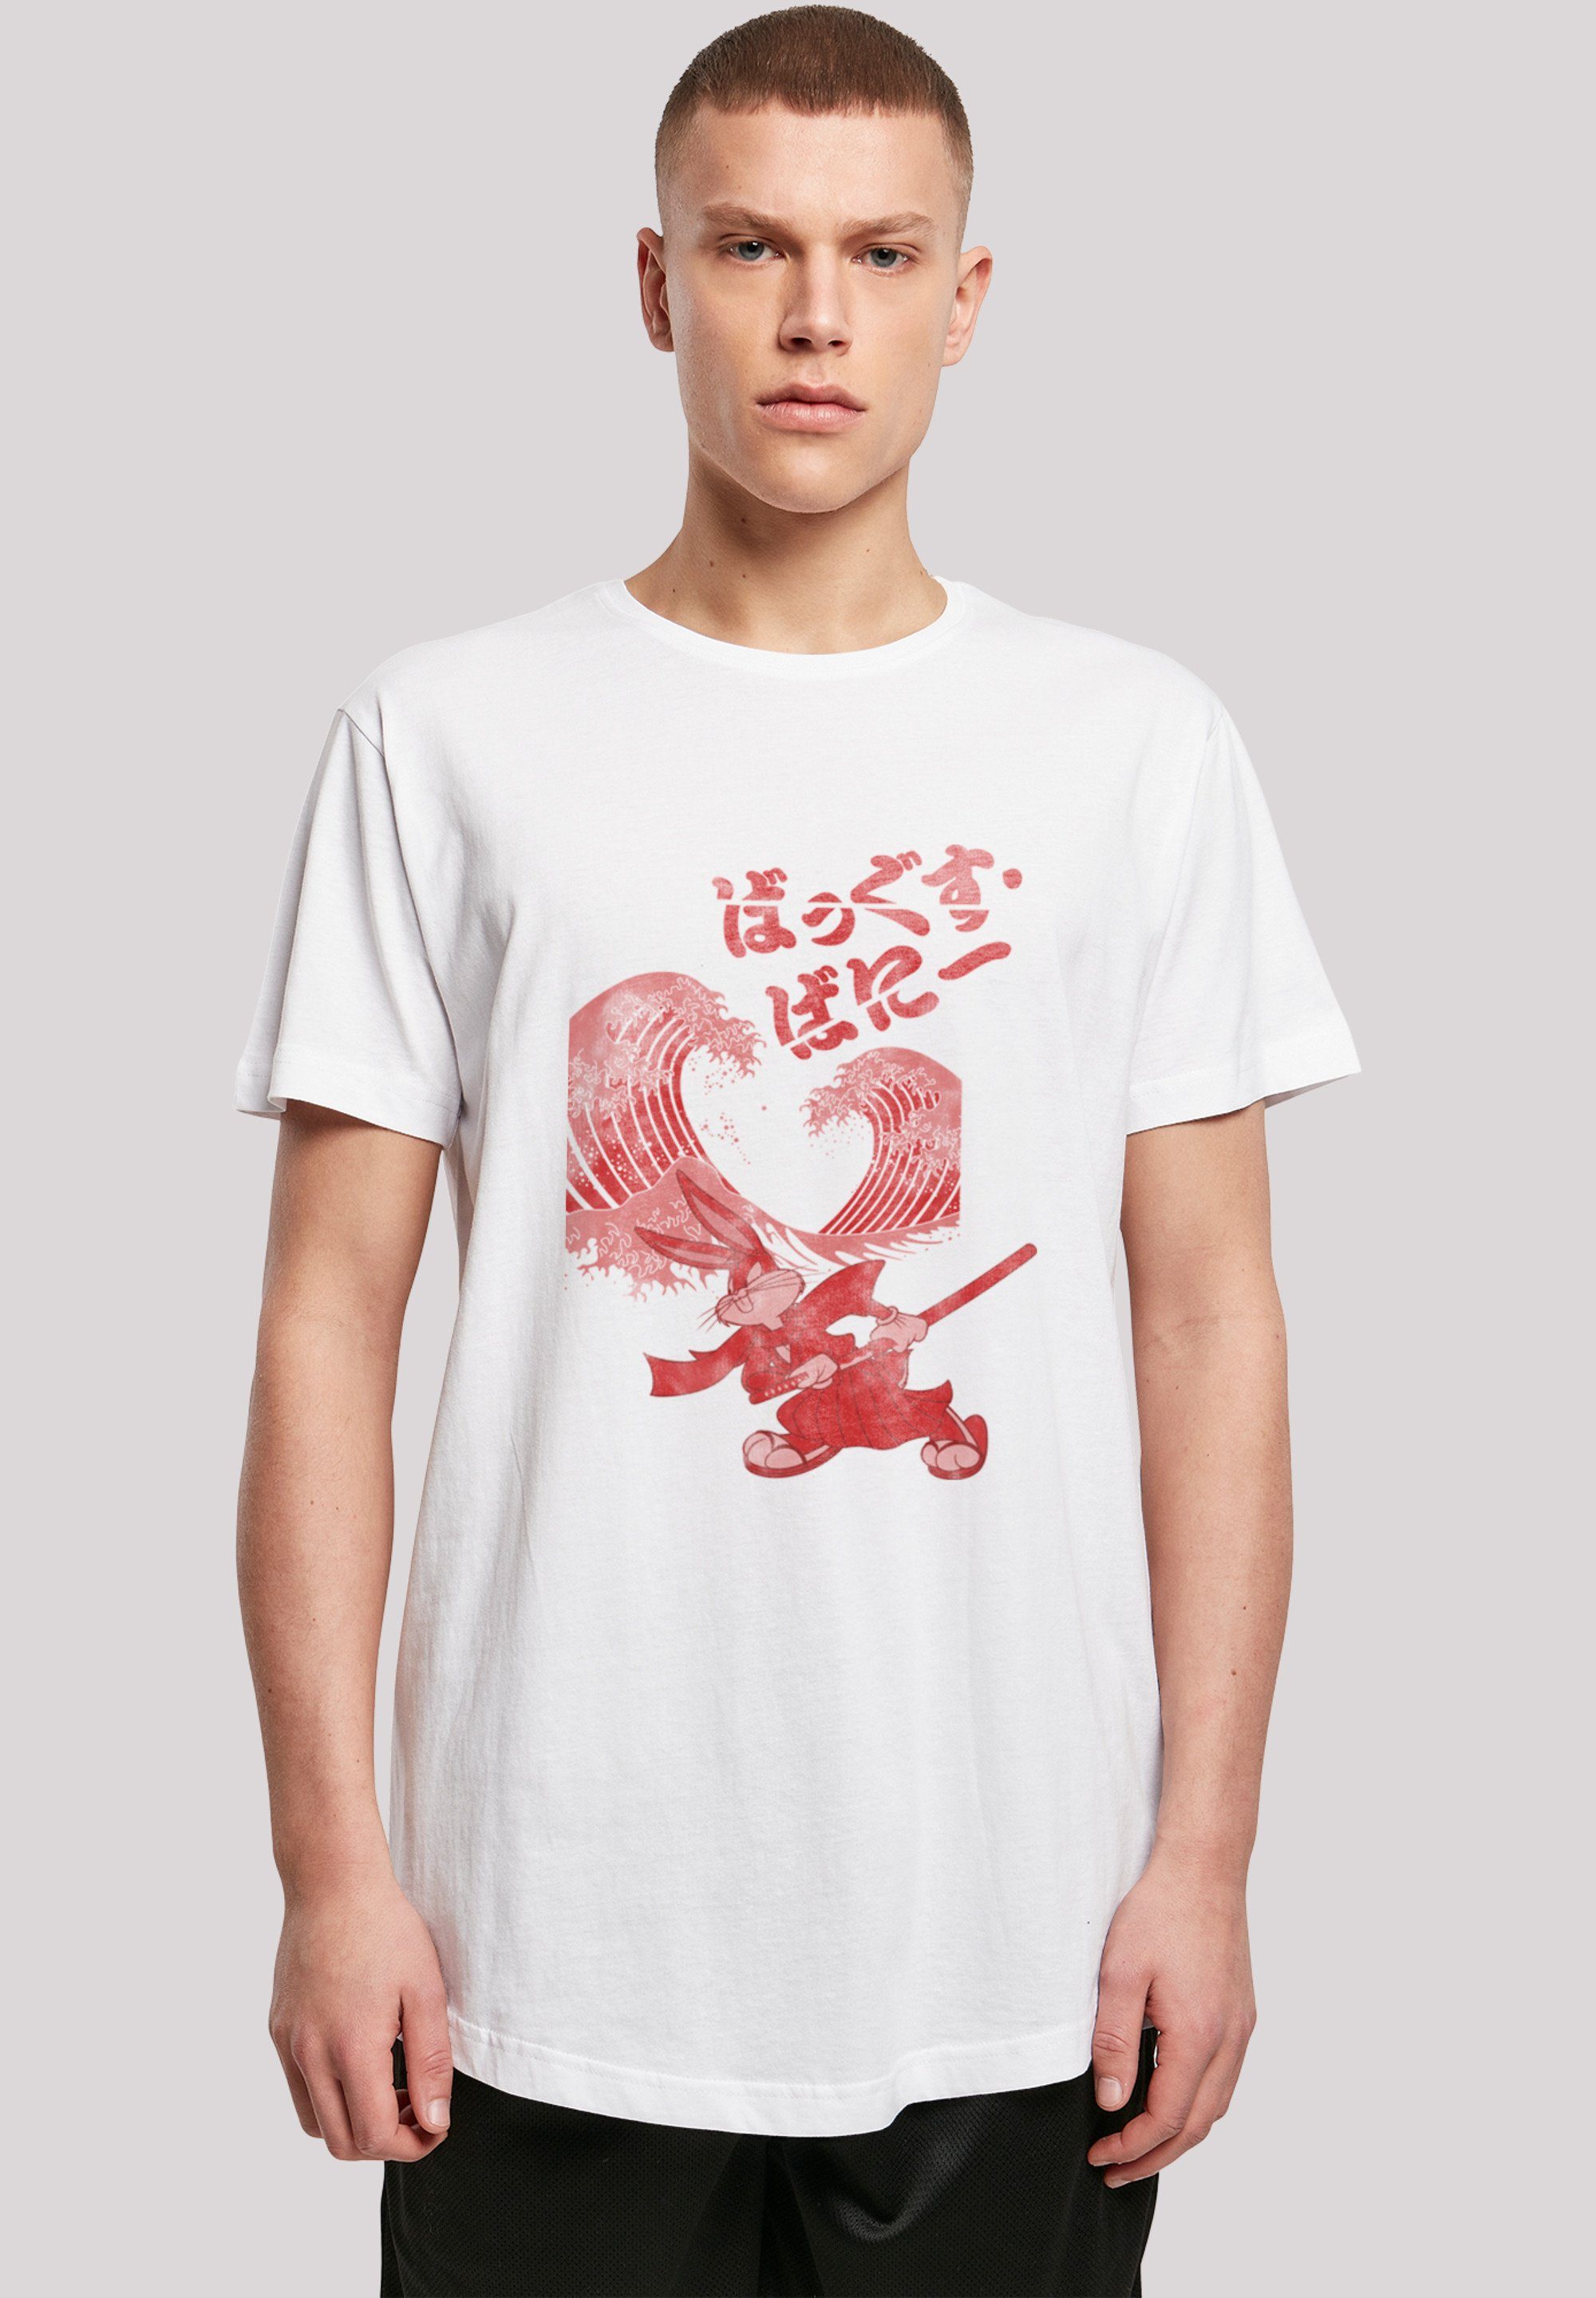 Tunes T-Shirt Print Bugs Bunny Looney F4NT4STIC weiß Shogun'